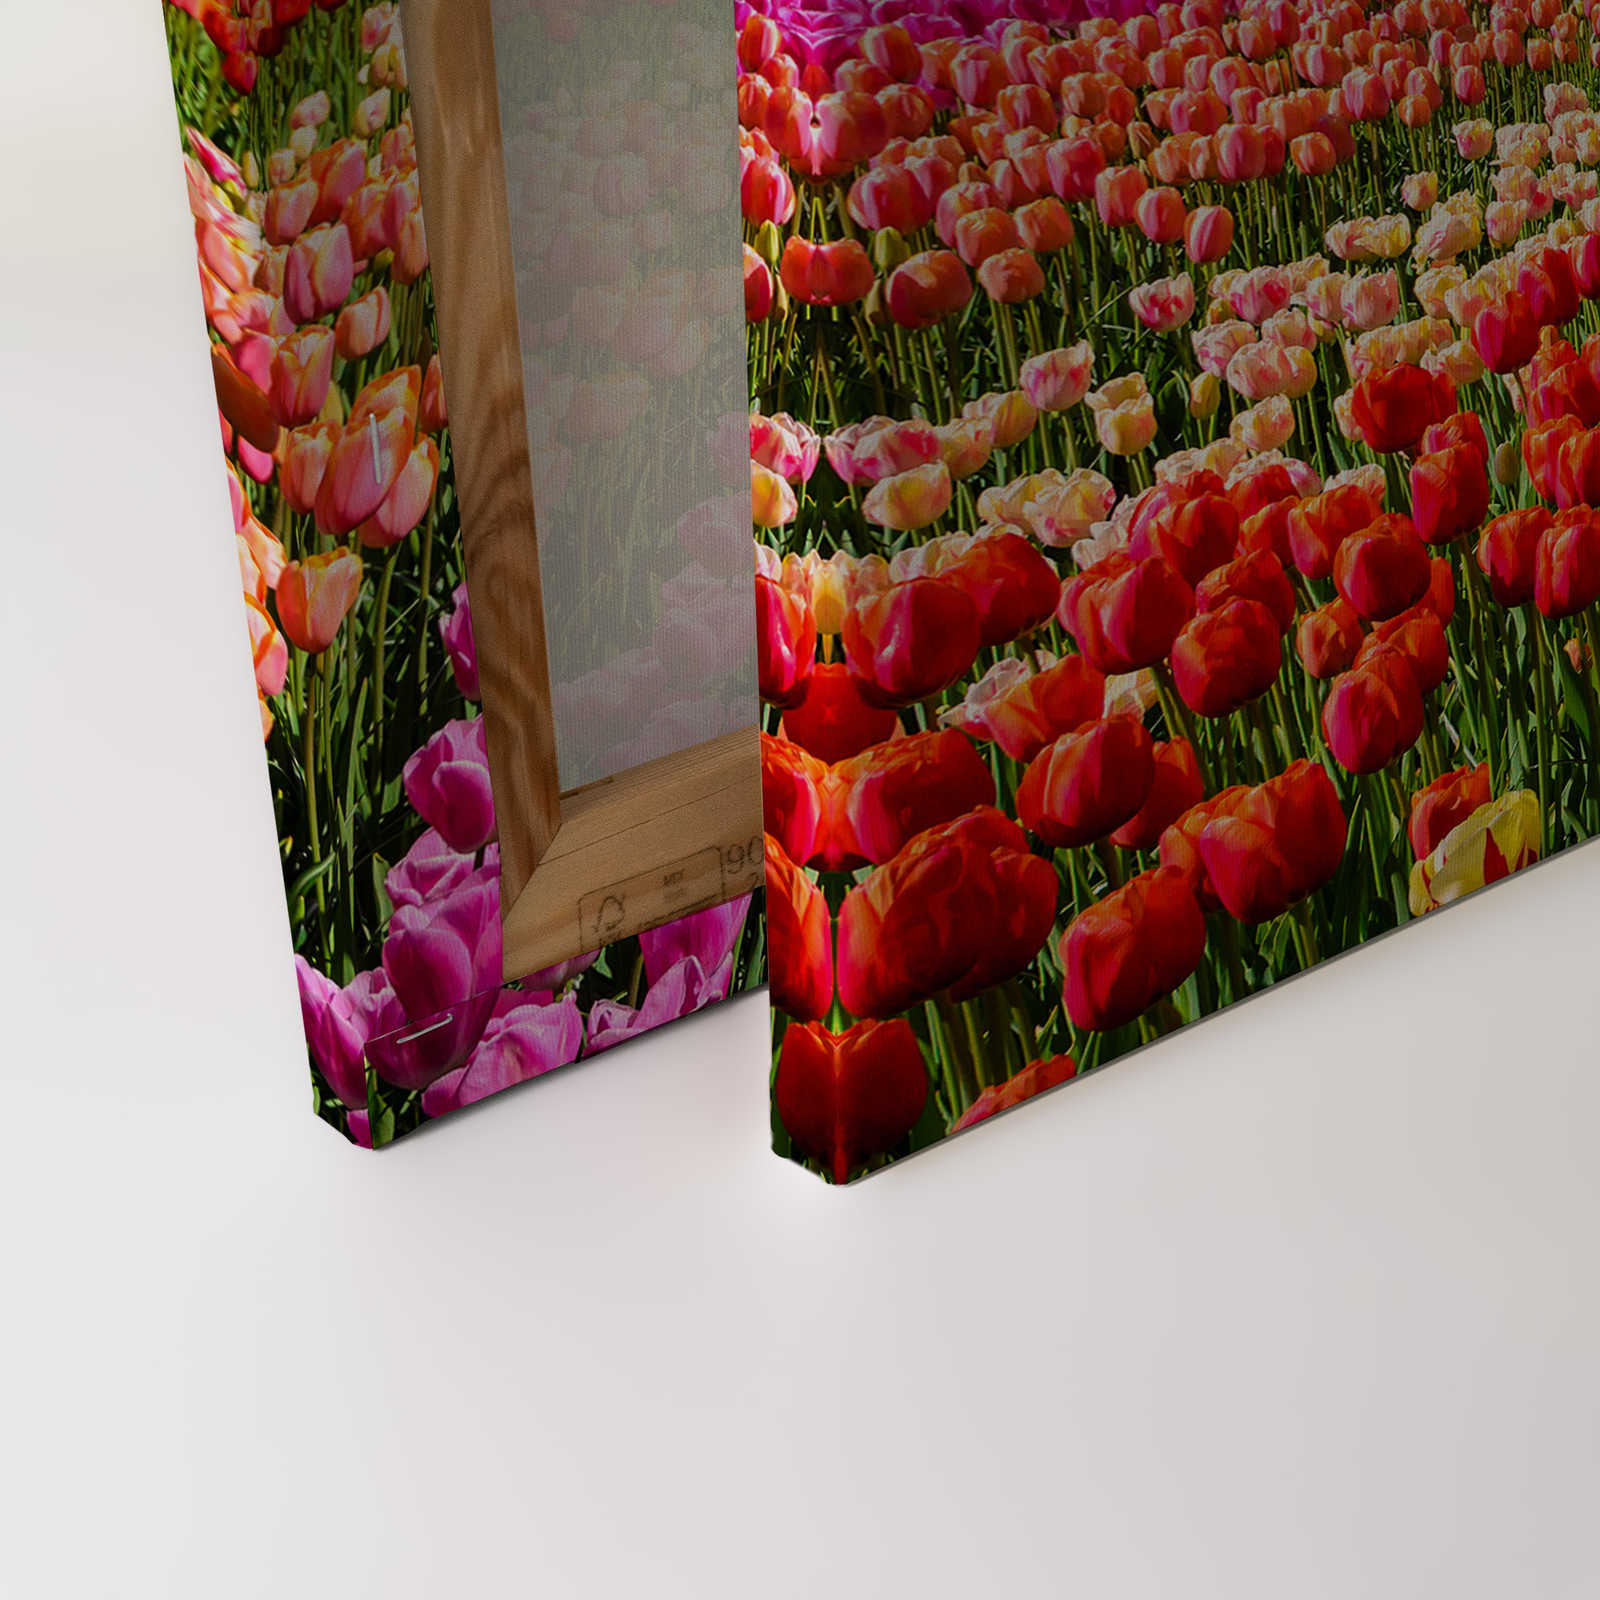             Canvas Holland Tulips & Pinwheel - 0.90 m x 0.60 m
        